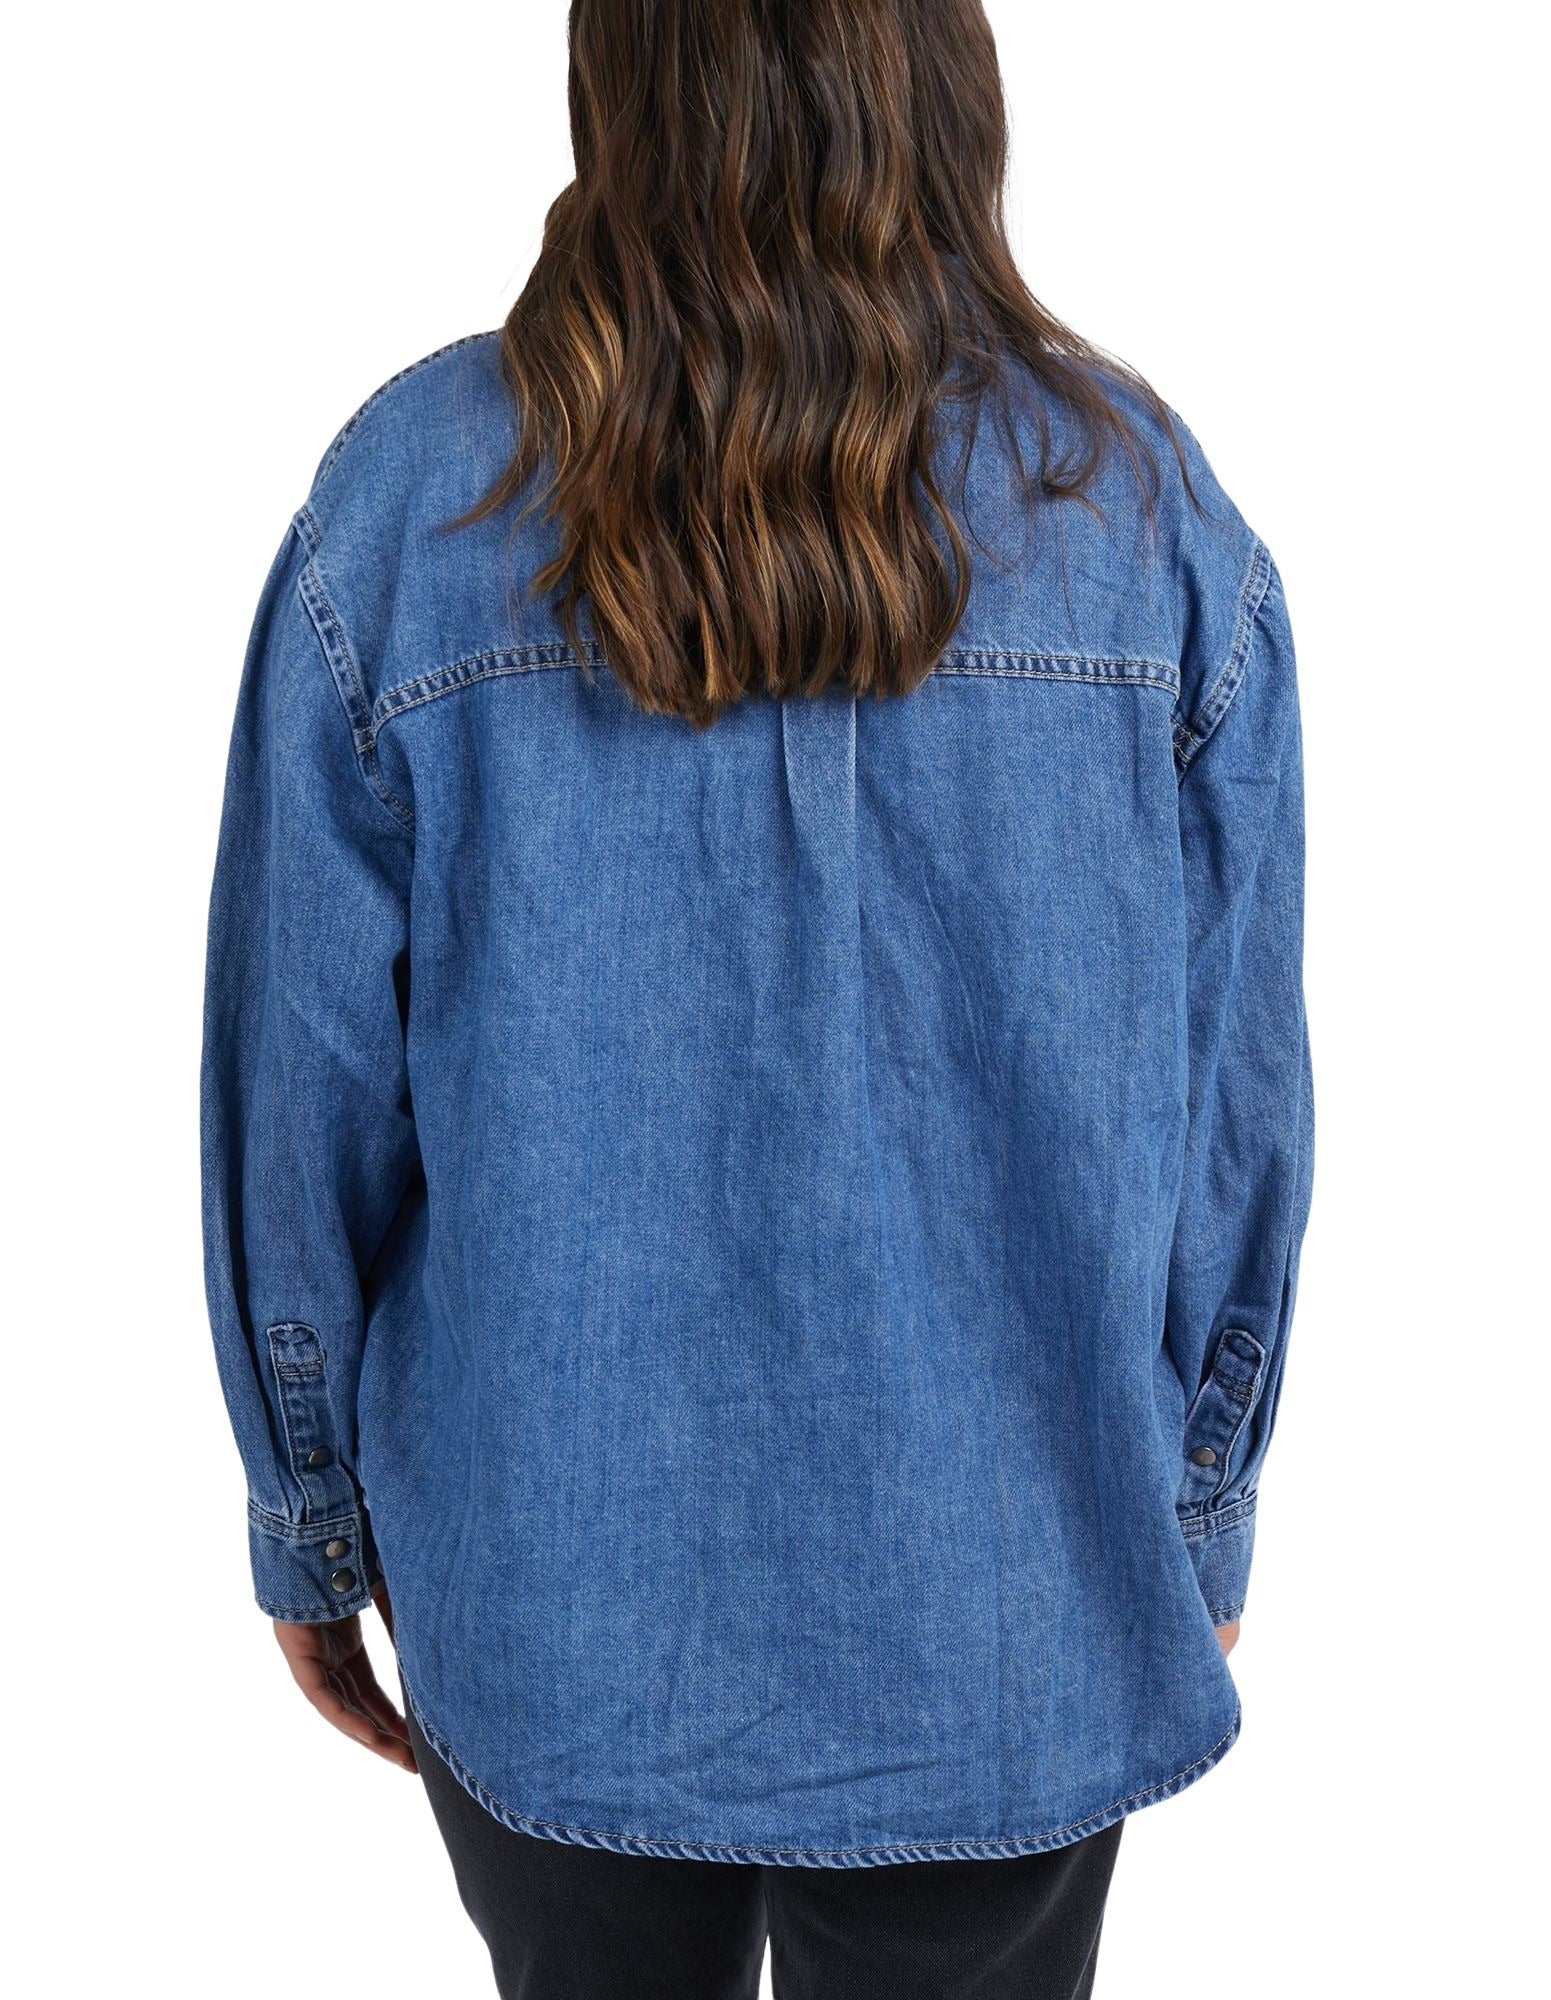 Foxwood Daisy Denim Shirt - Vintage Mid Blue - Last One Size 10!